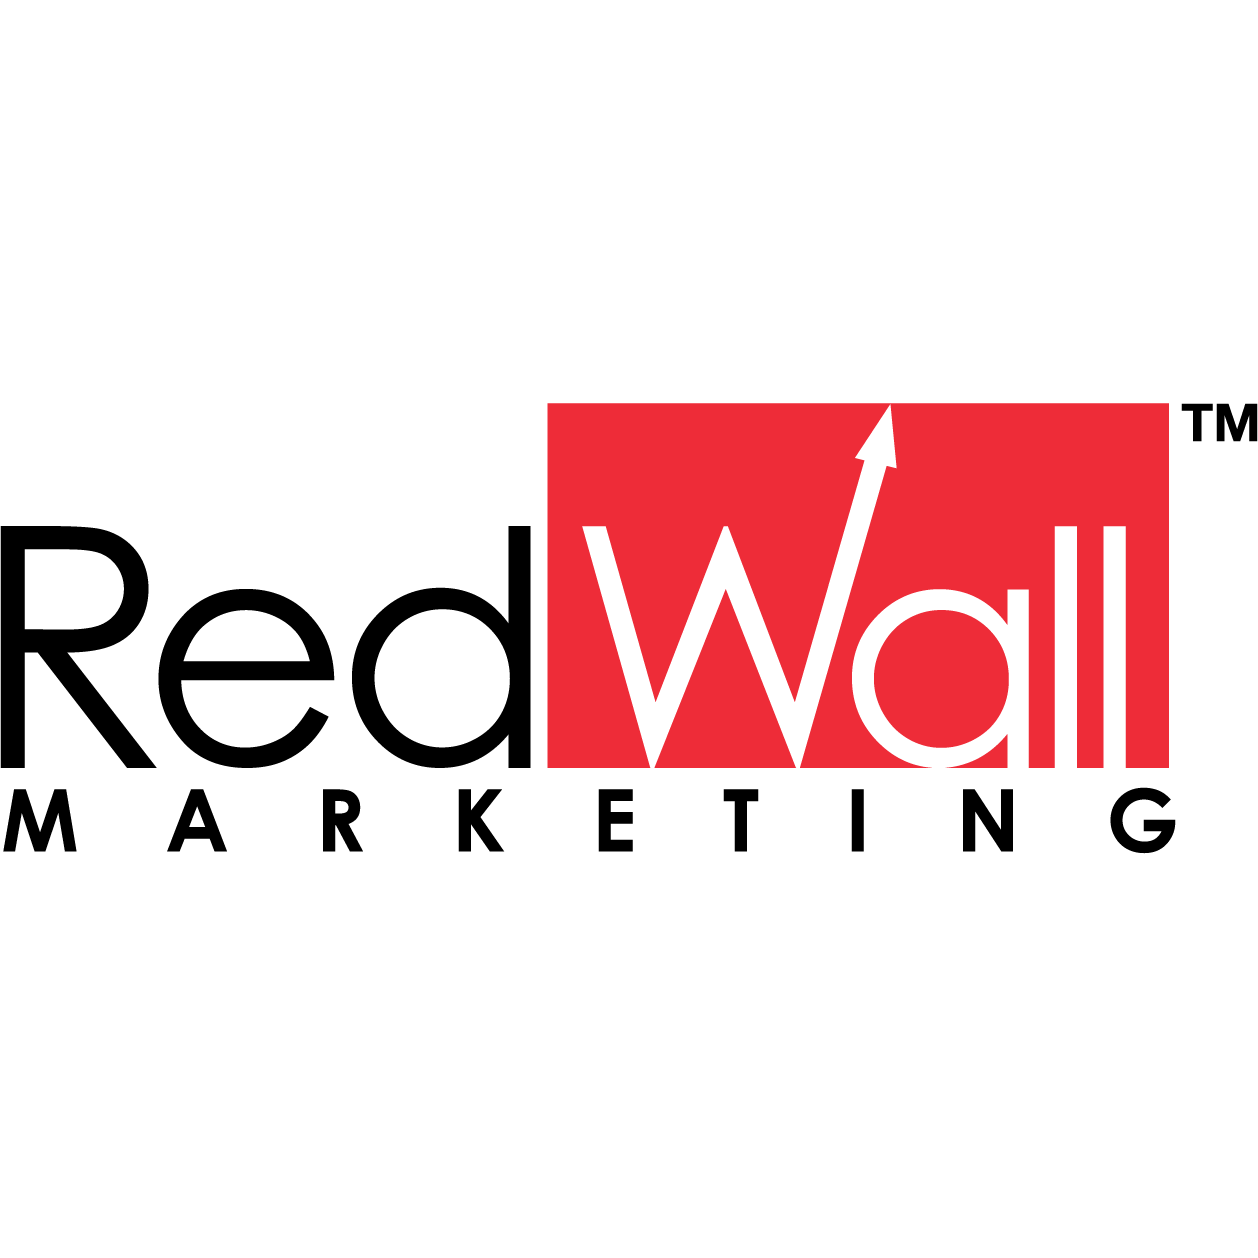 Red Wall Marketing Logo